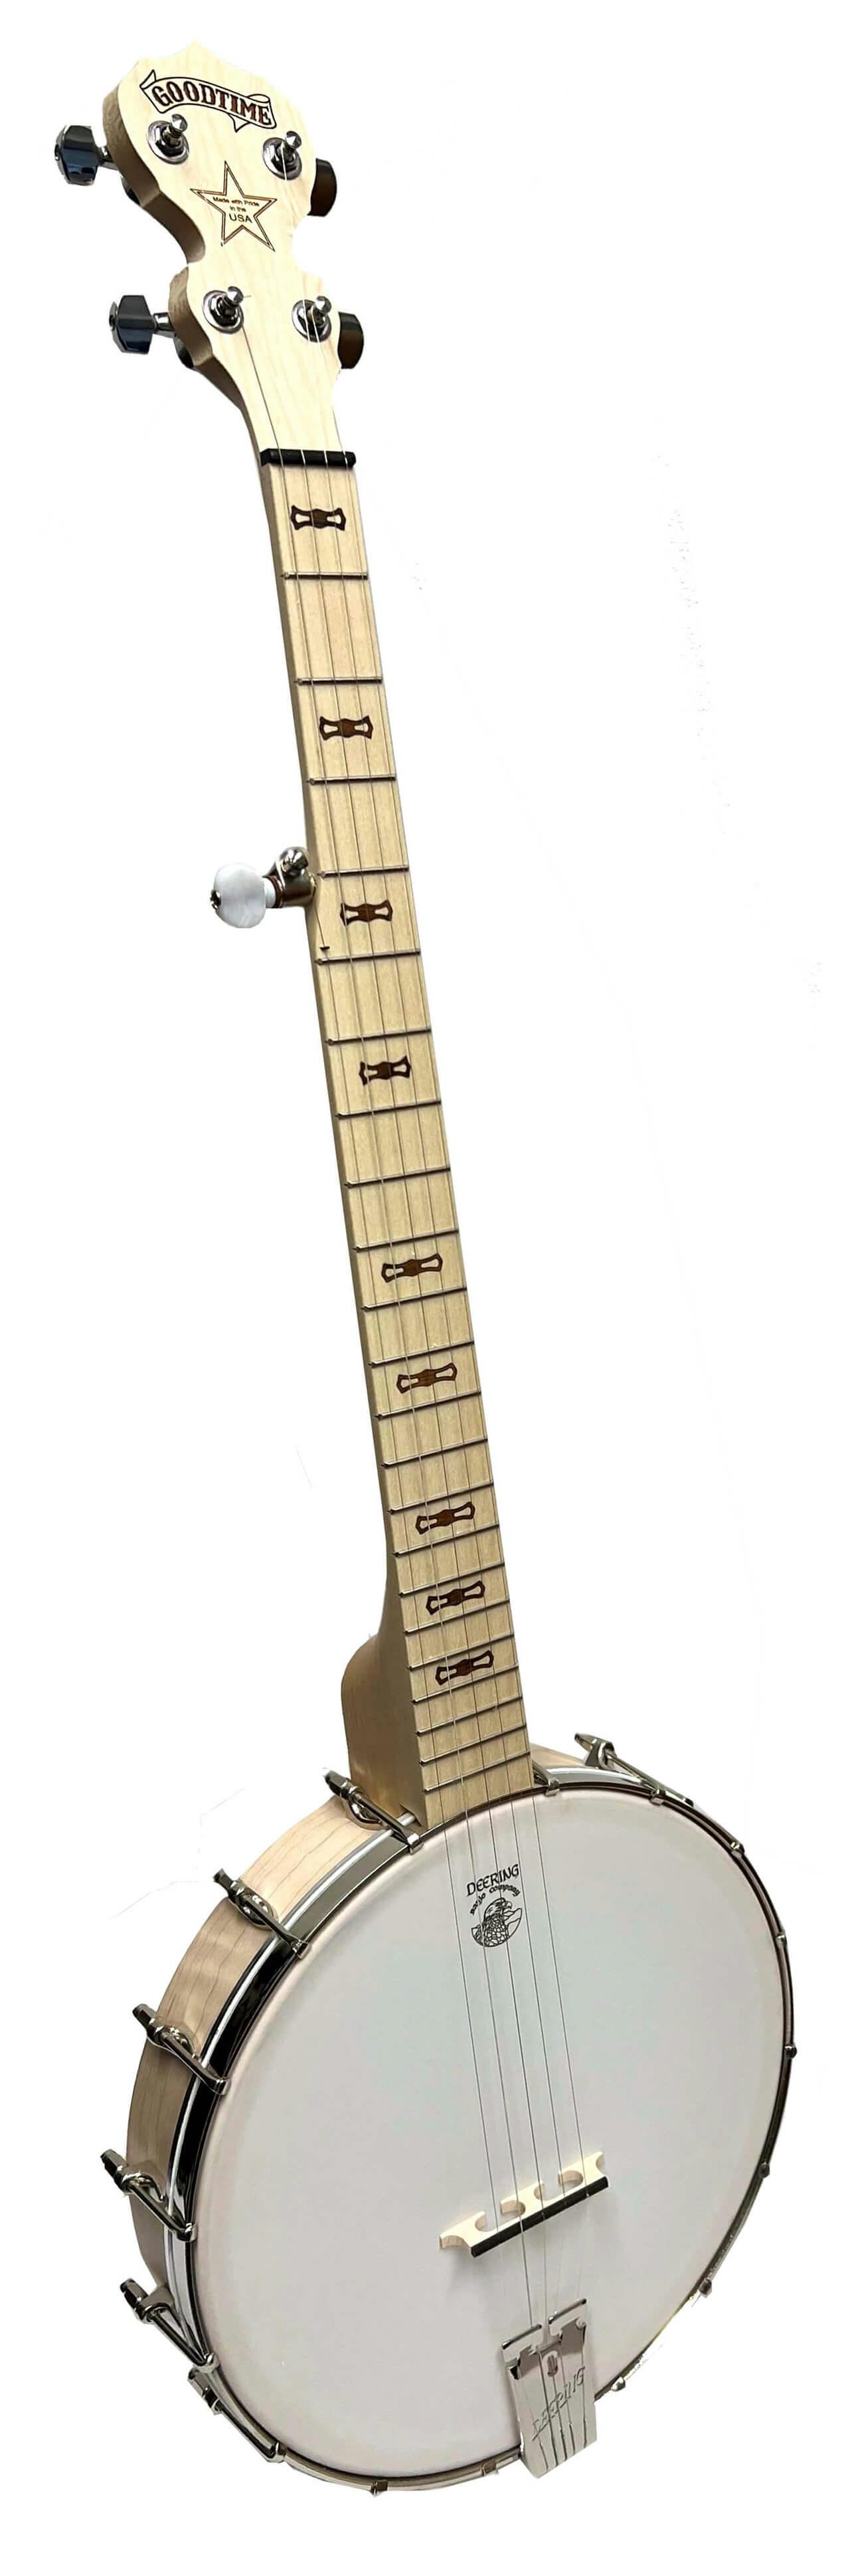 Deering Goodtime USA Built 5-String Banjo